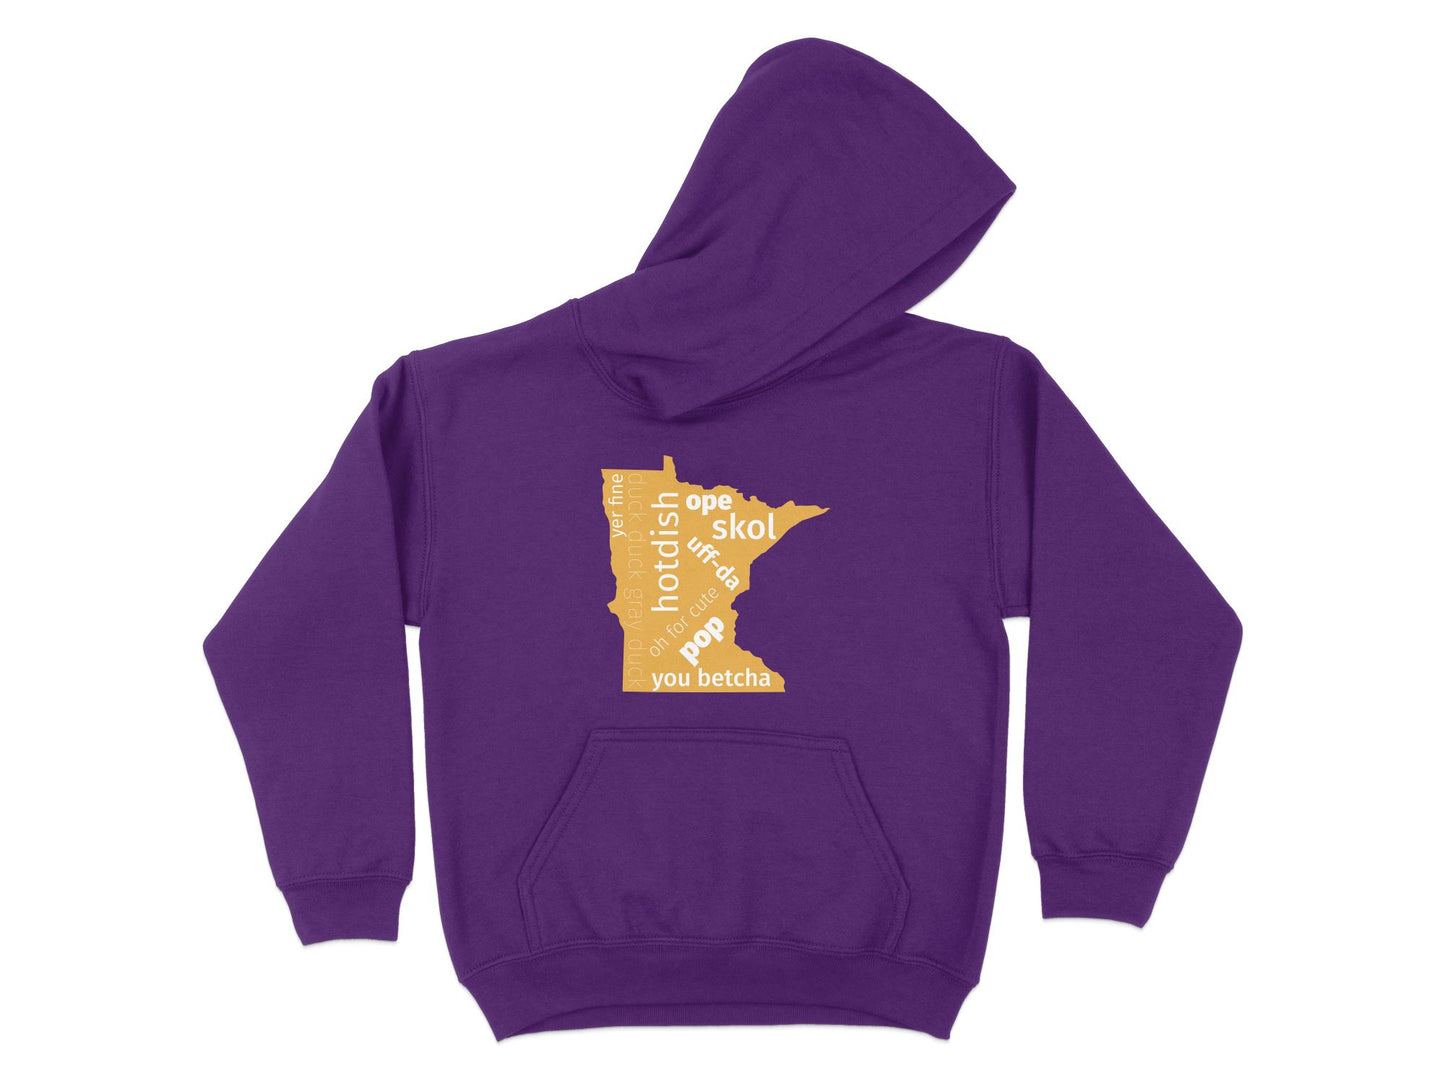 Minnesota Hoodie- The Most Minnesota Shirt Ever, purple